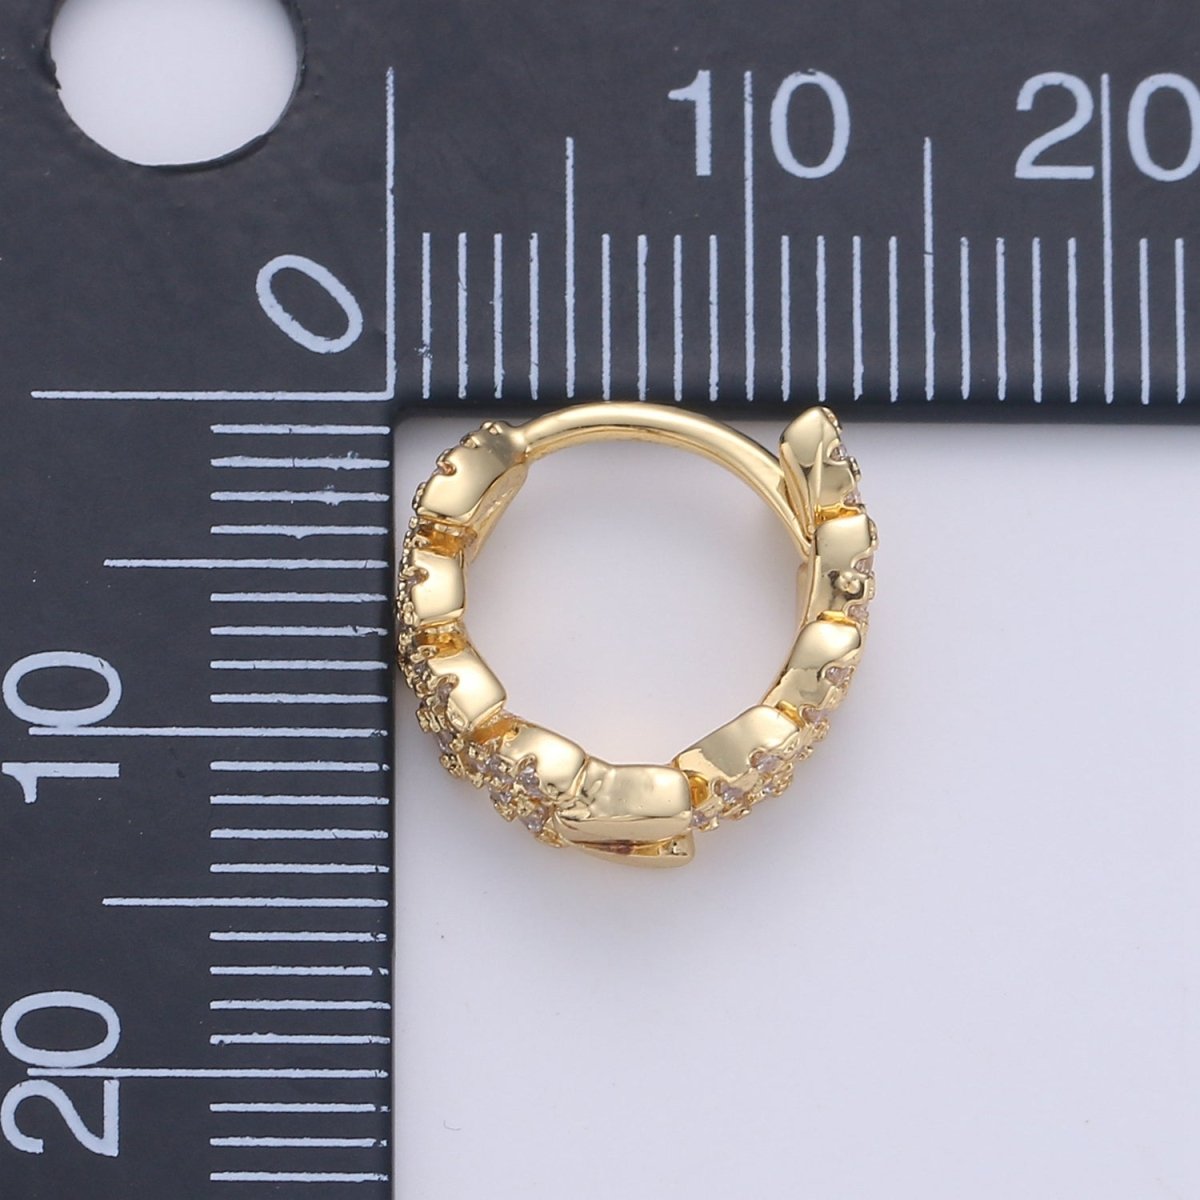 Golden Leaf Gold Filled Huggies Dainty Gold Olive Leaf Earring Hoop Earrings, Huggie Delicate Earrings, Minimalist, Boho Earrings CZ Cubic Simple earring Gift for Her K-554 - DLUXCA